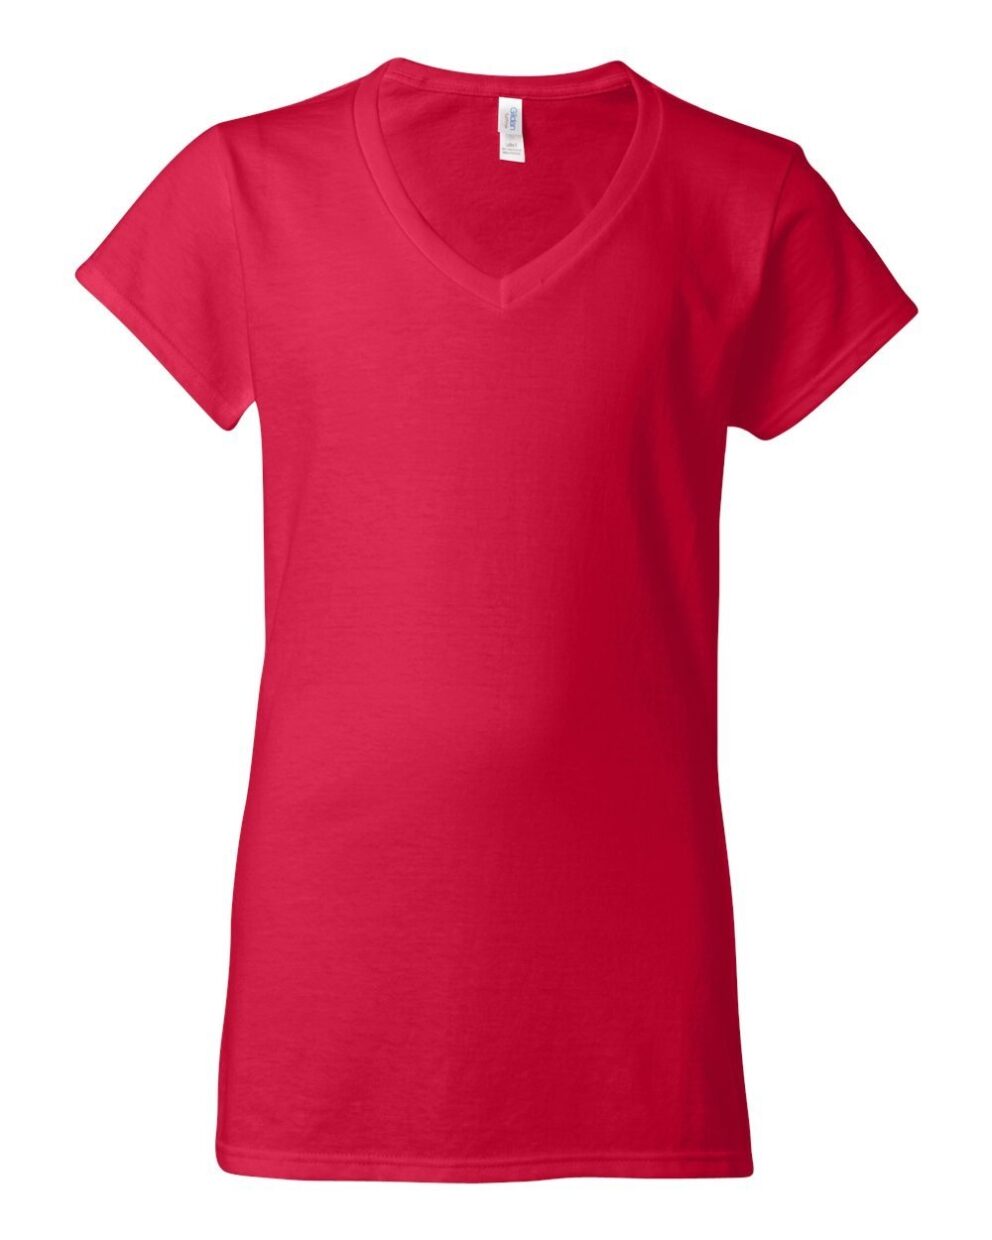 Ladies V-neck Red Cotton T-shirt